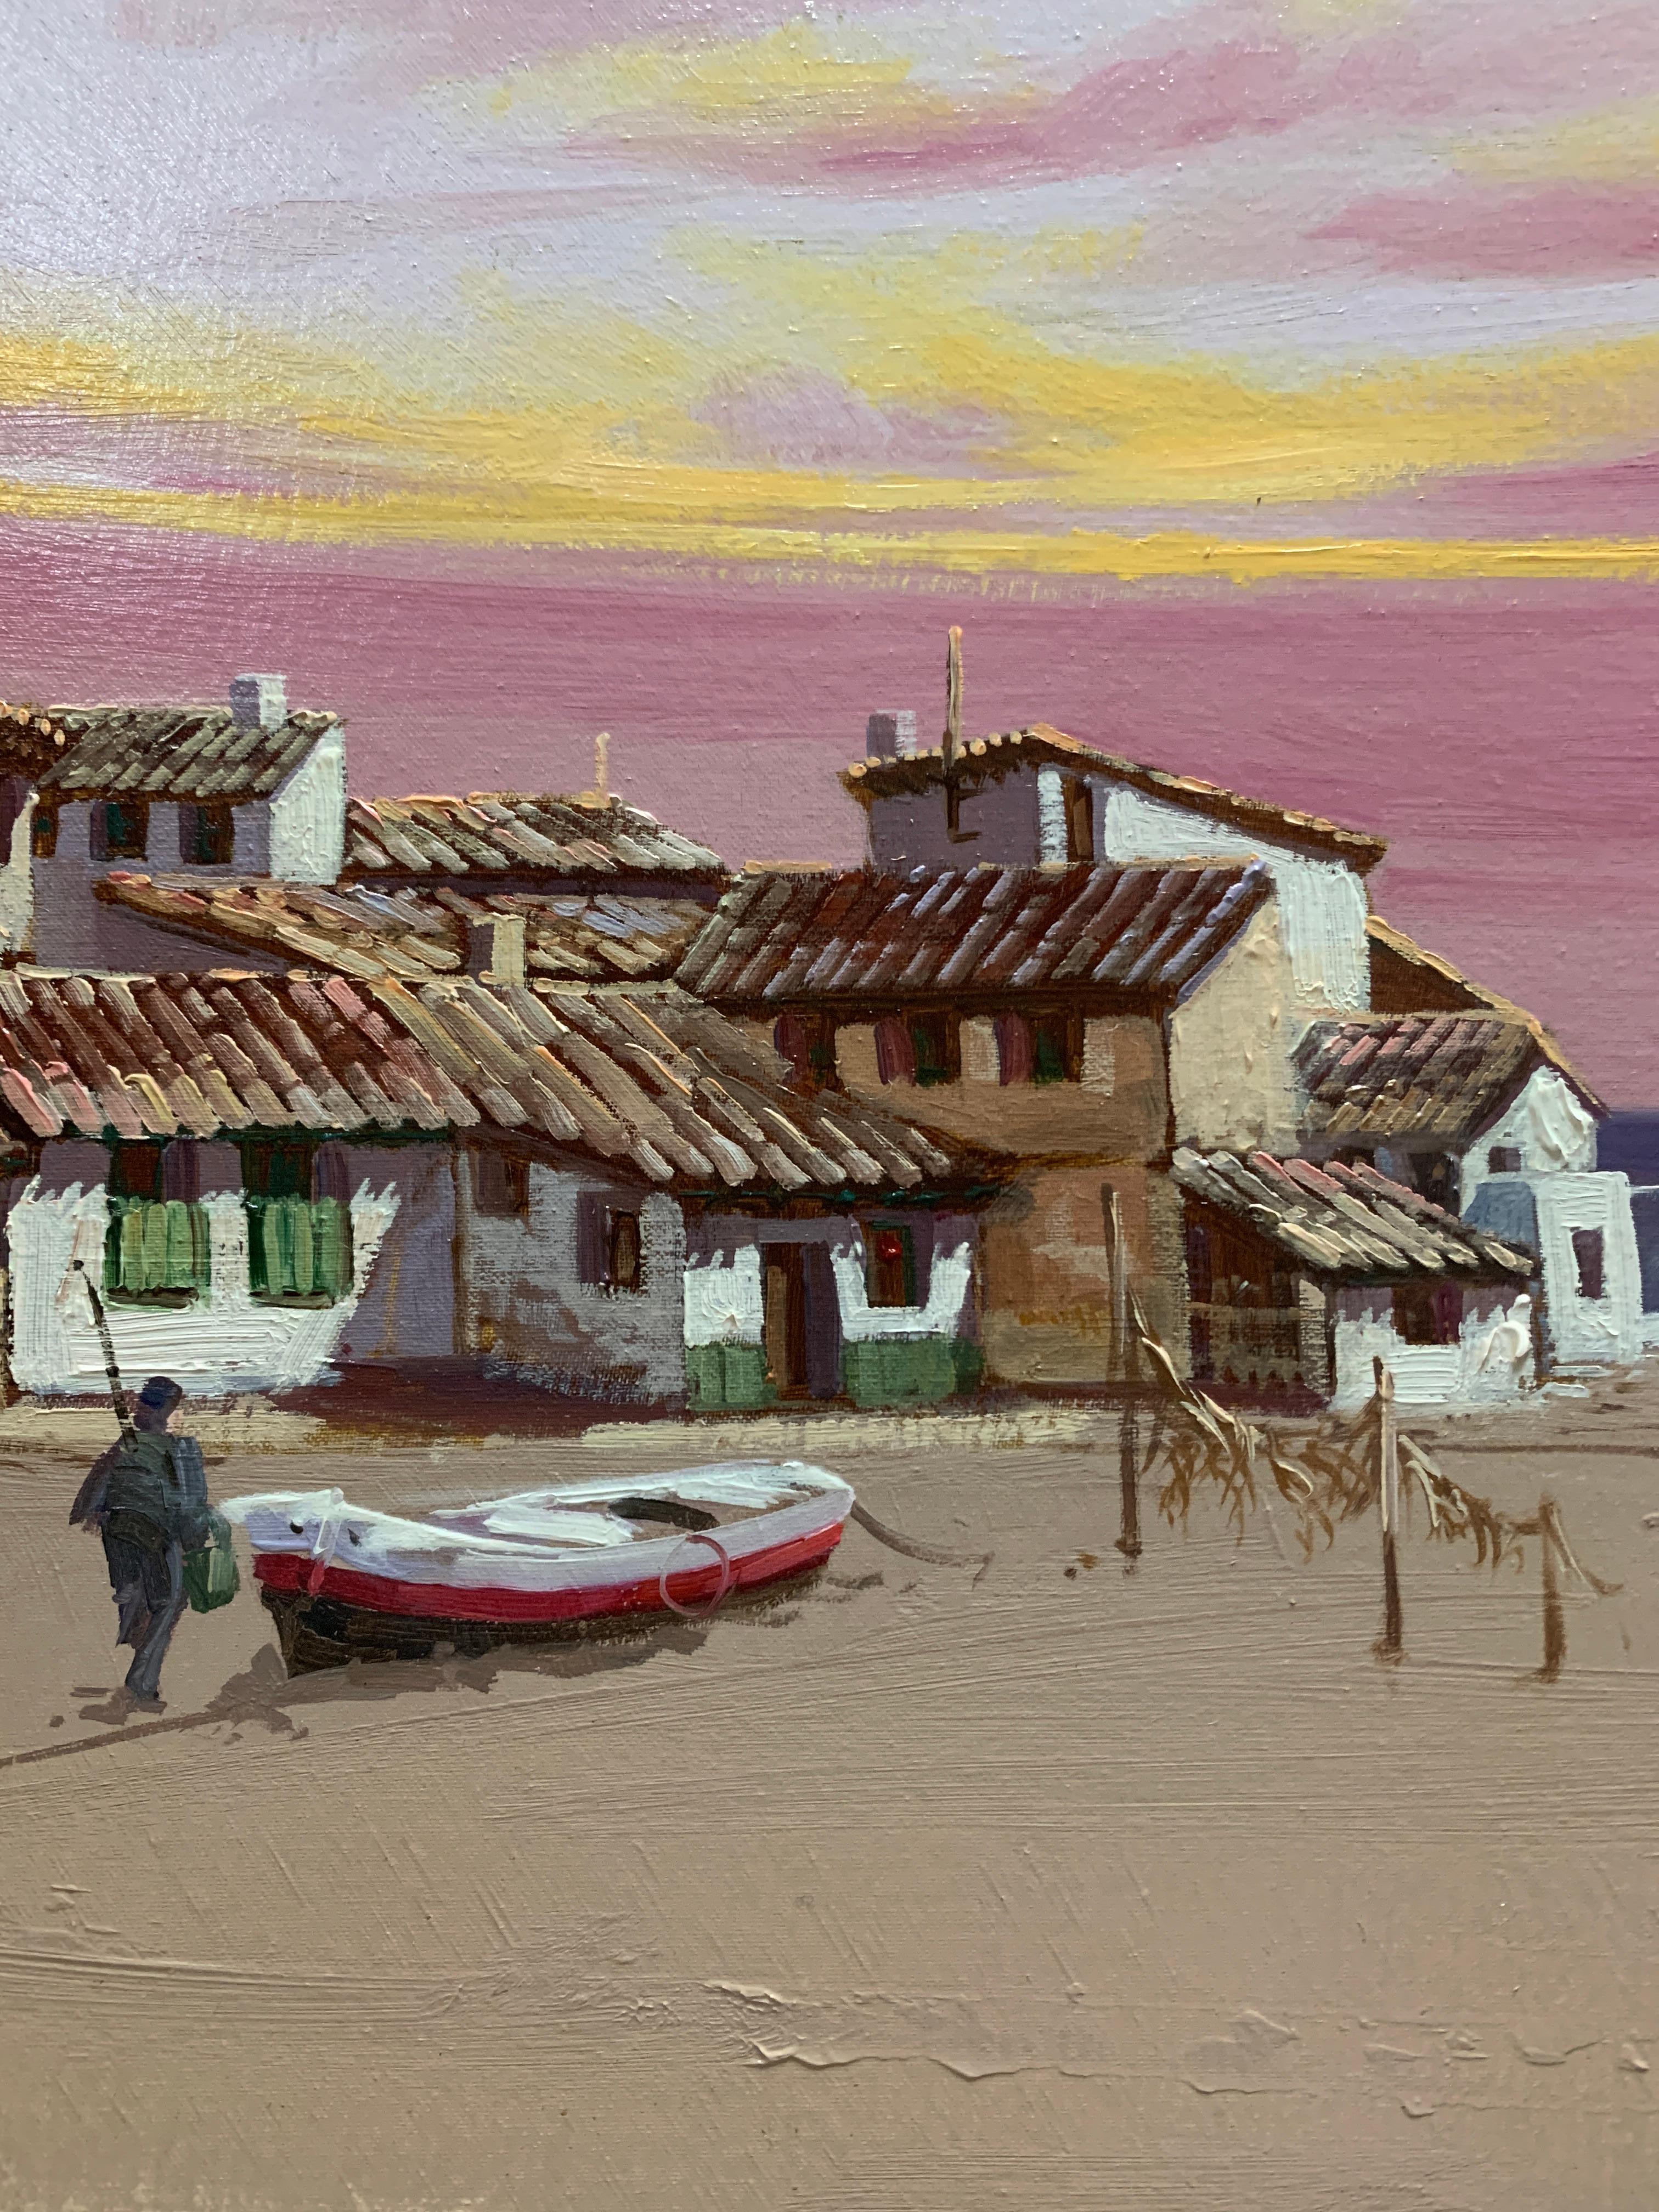 Sunset on the Beach - Painting by Fernando Alcaraz